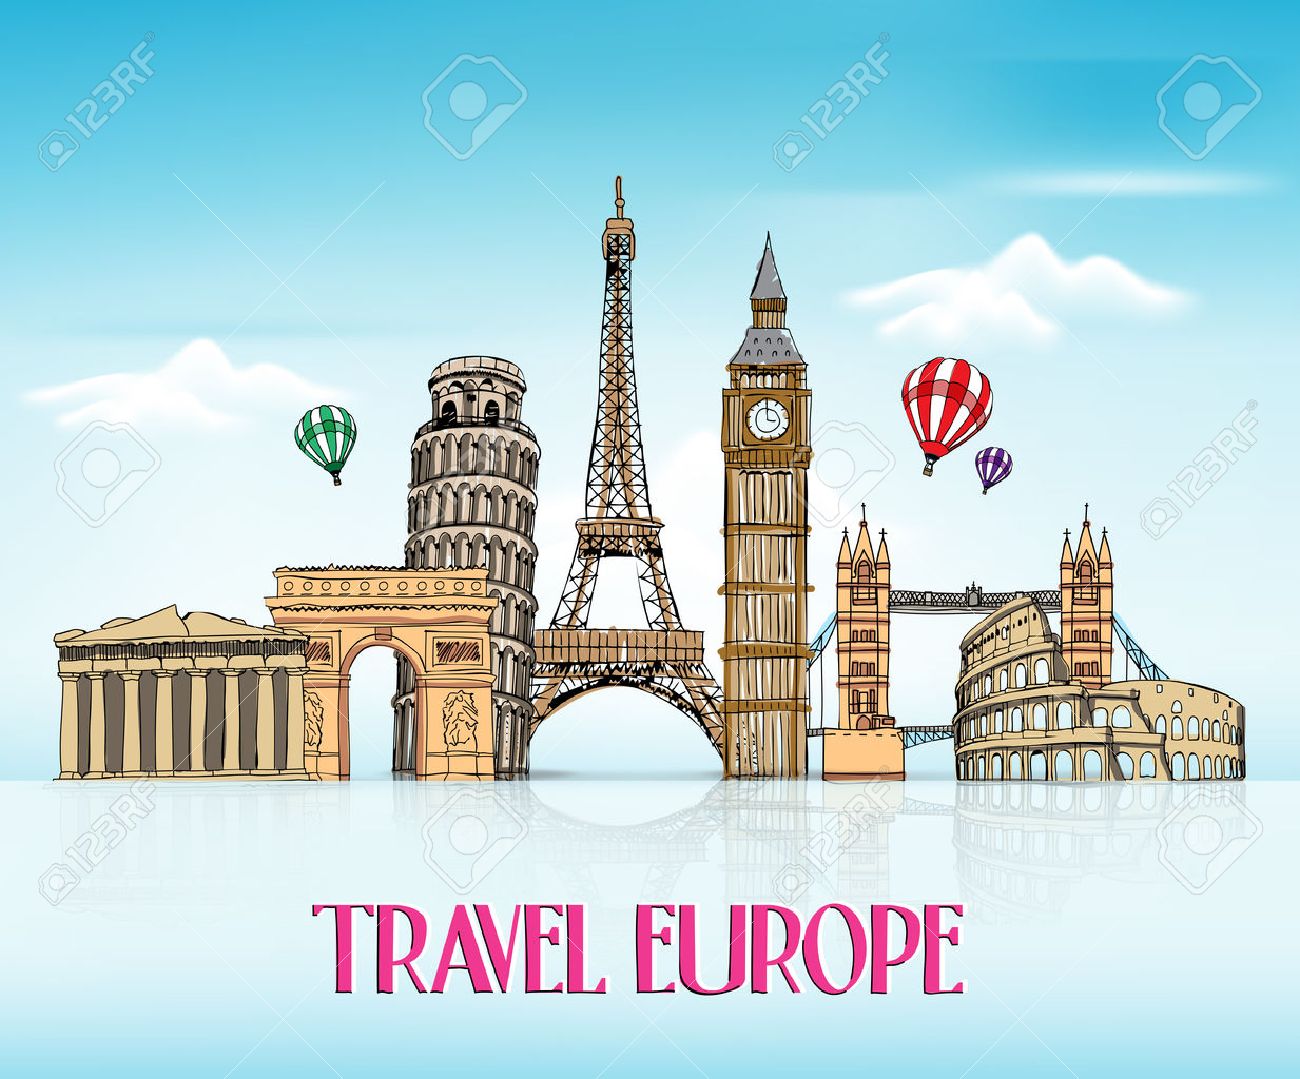 europe clipart travel europe